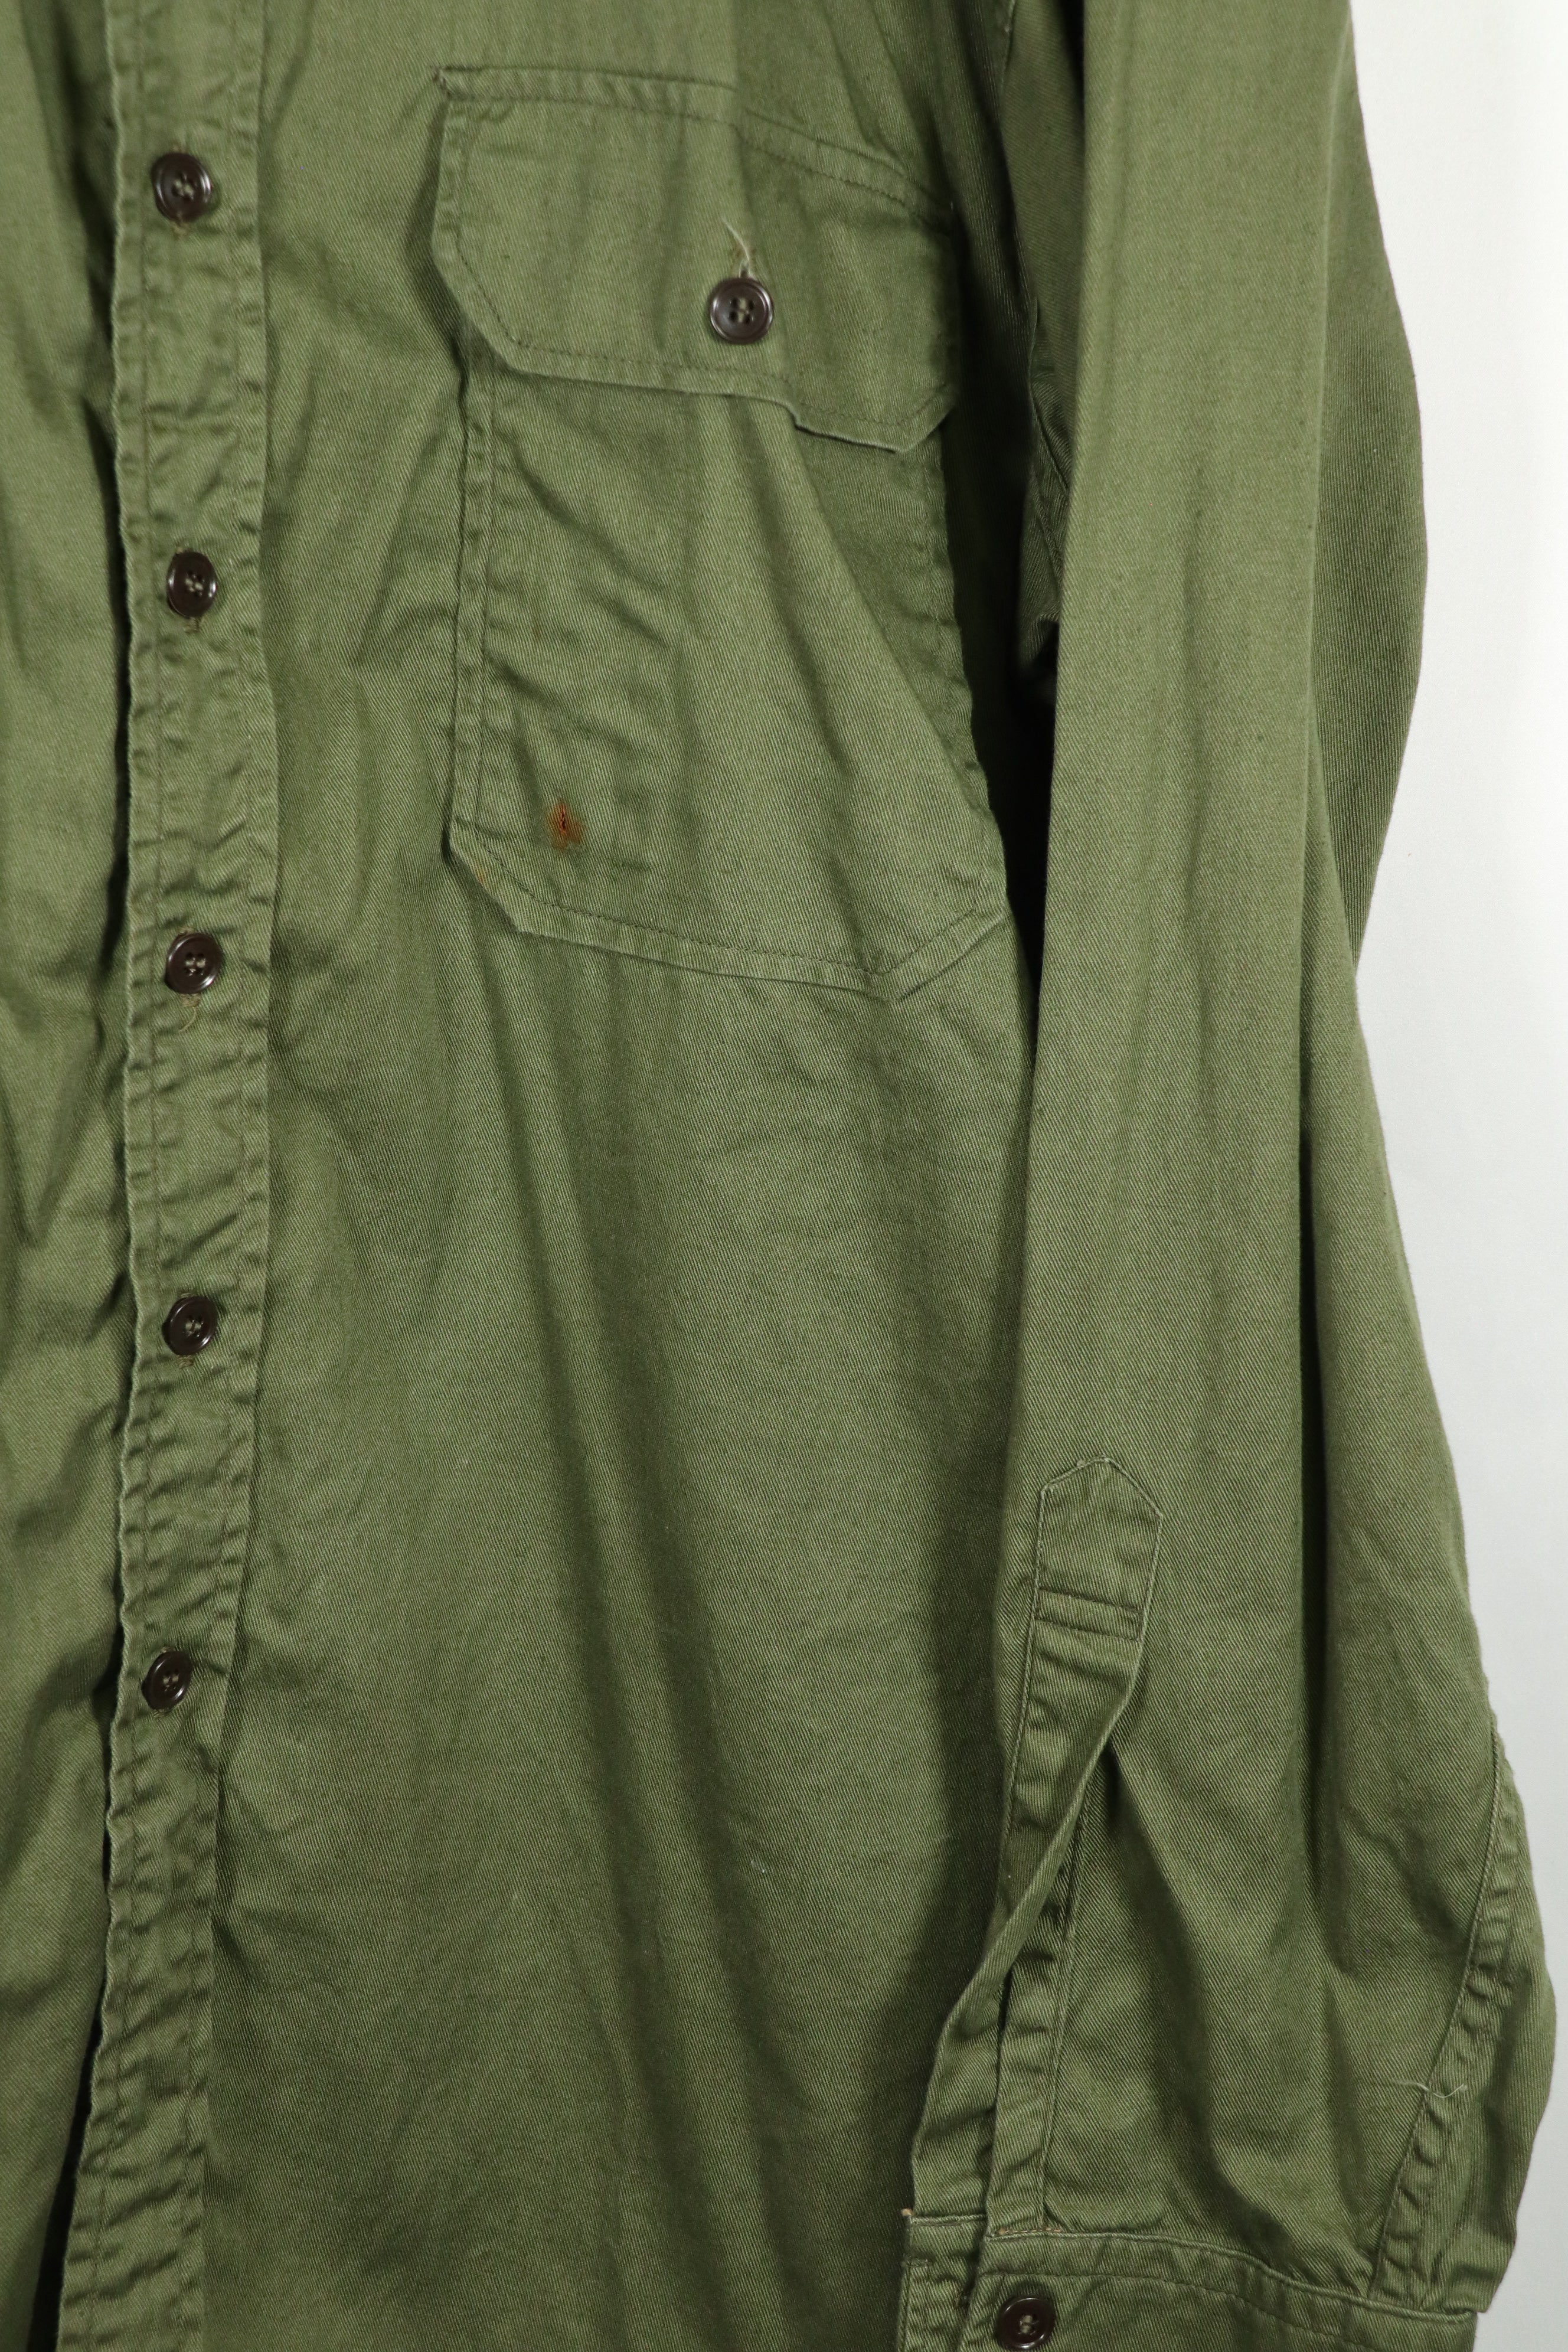 Real 1965 Australian Army Fatigue Shirt, used.